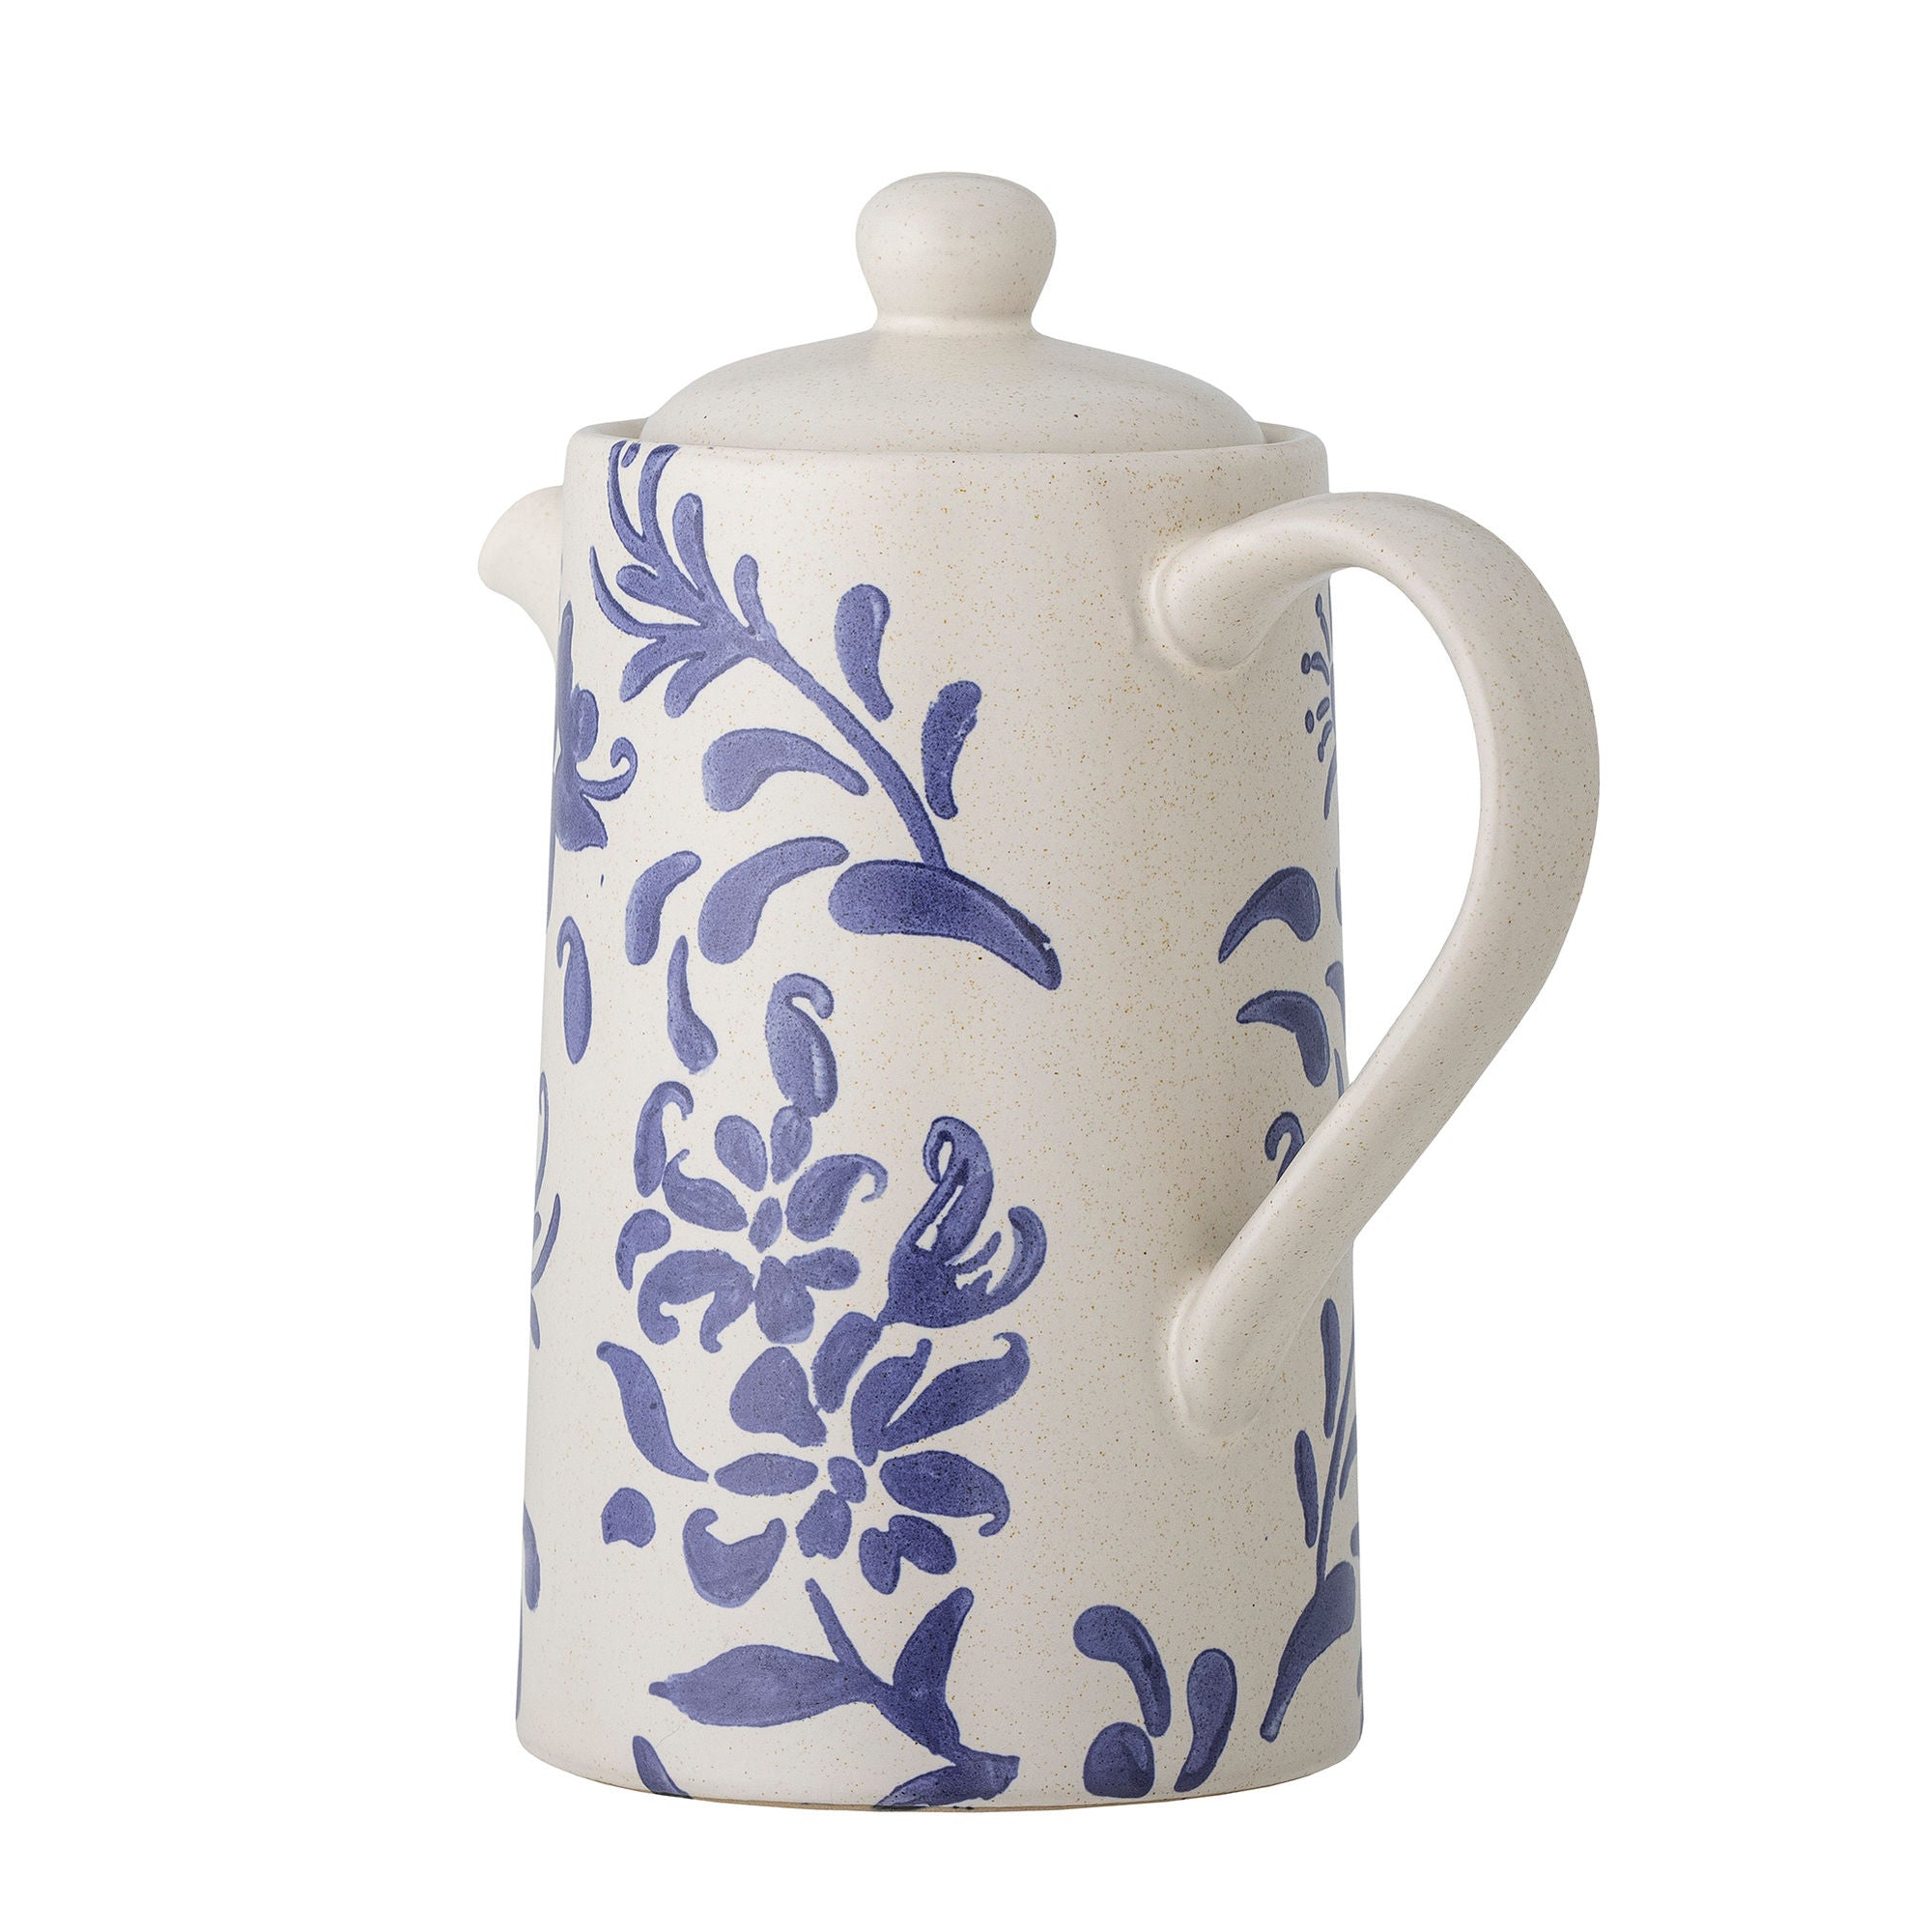 Creative Collection Petunia Teapot, Blue, Stoneware